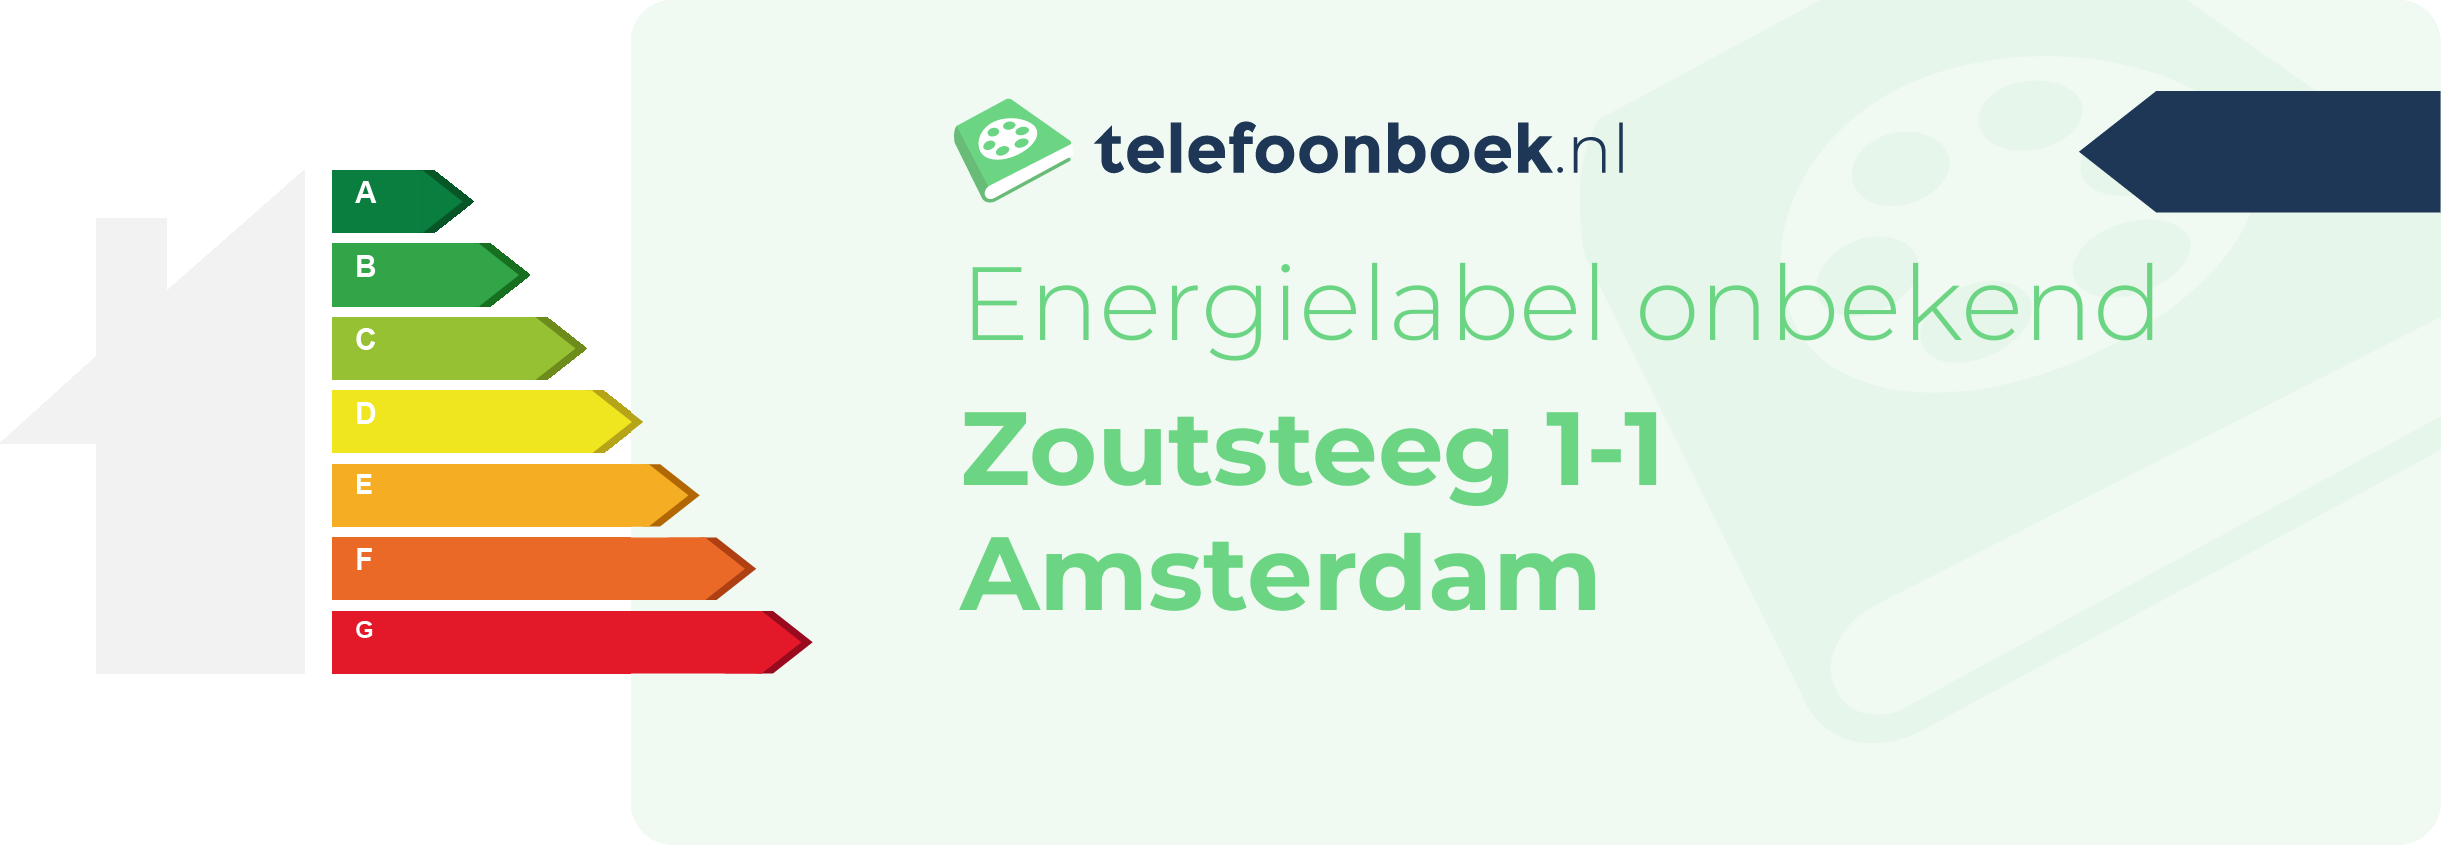 Energielabel Zoutsteeg 1-1 Amsterdam